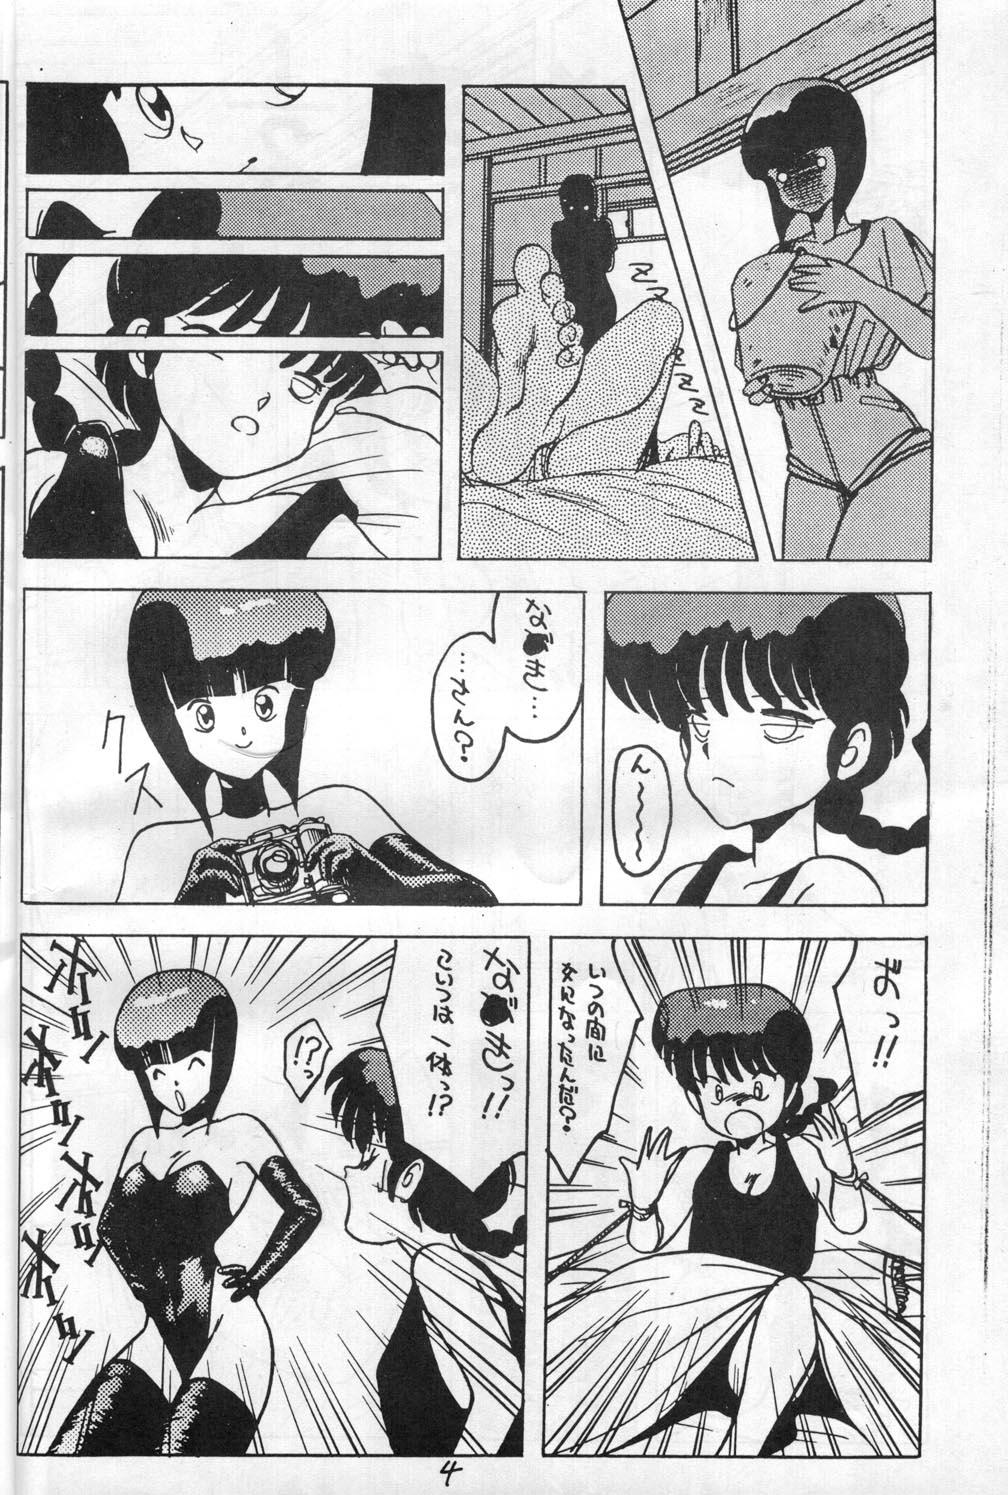 Show Kimi no saifu ni COBRA TWIST - Ranma 12 Chica - Page 3